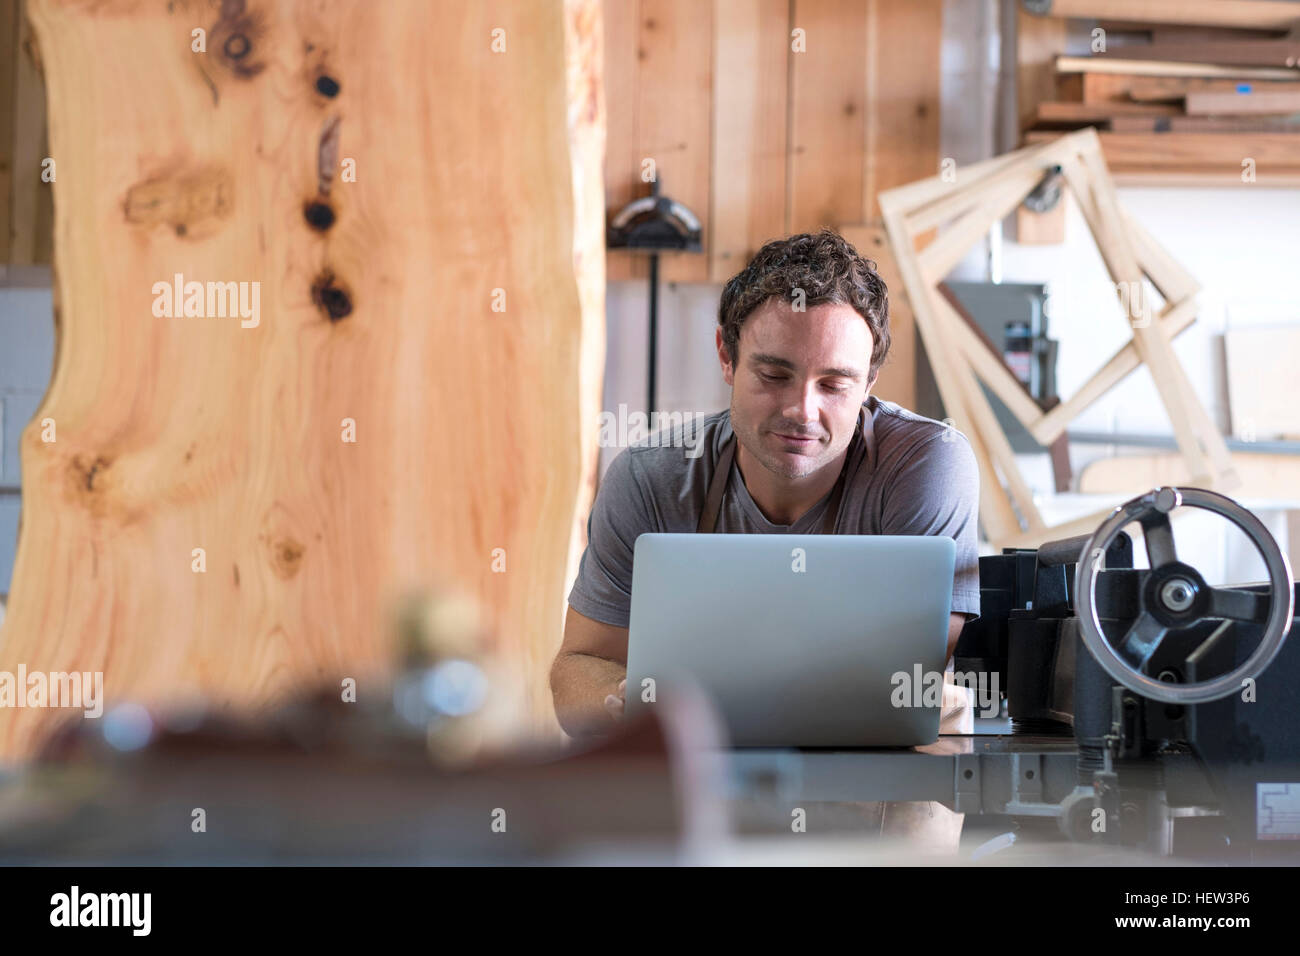 Carpenter at his workshop, using laptop Stock Photo